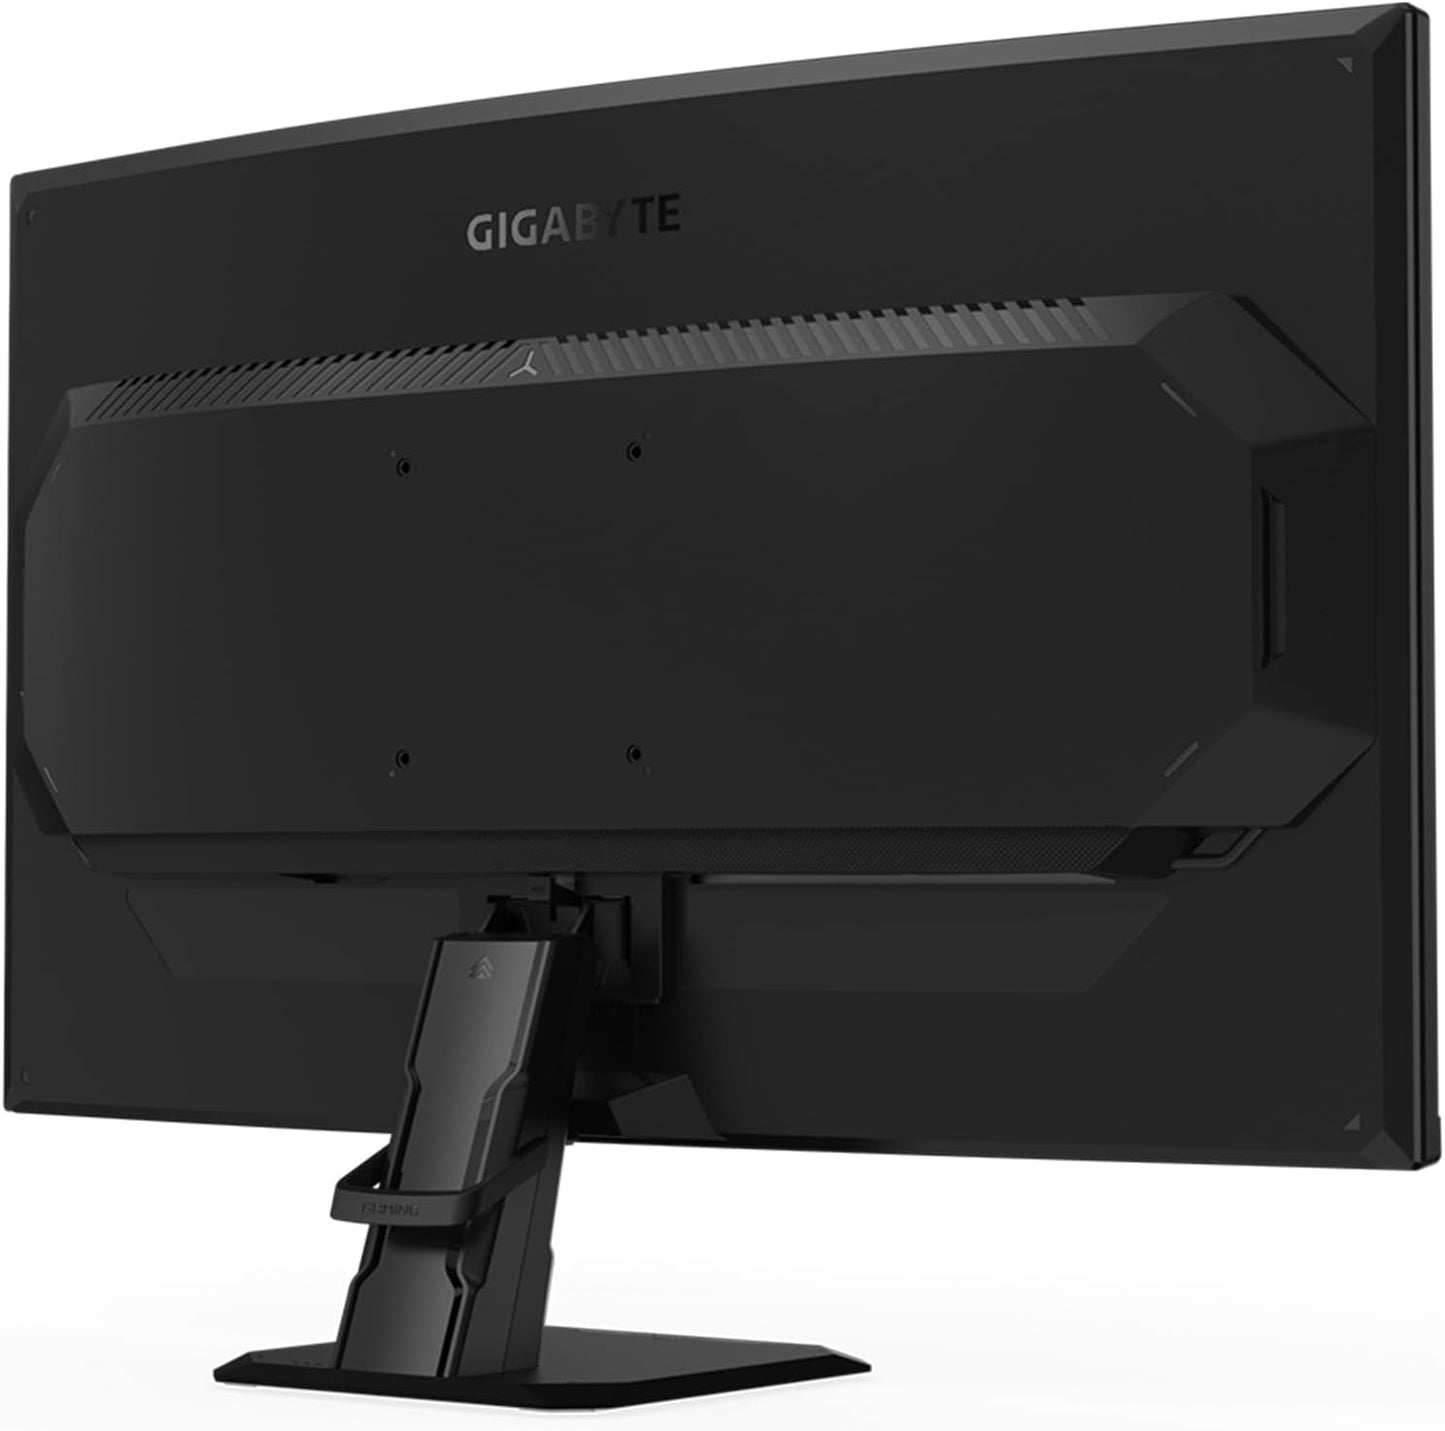 GIGABYTE GS27FC 27 Inch 180Hz 1080P FHD FreeSync Premium Gaming Monitor